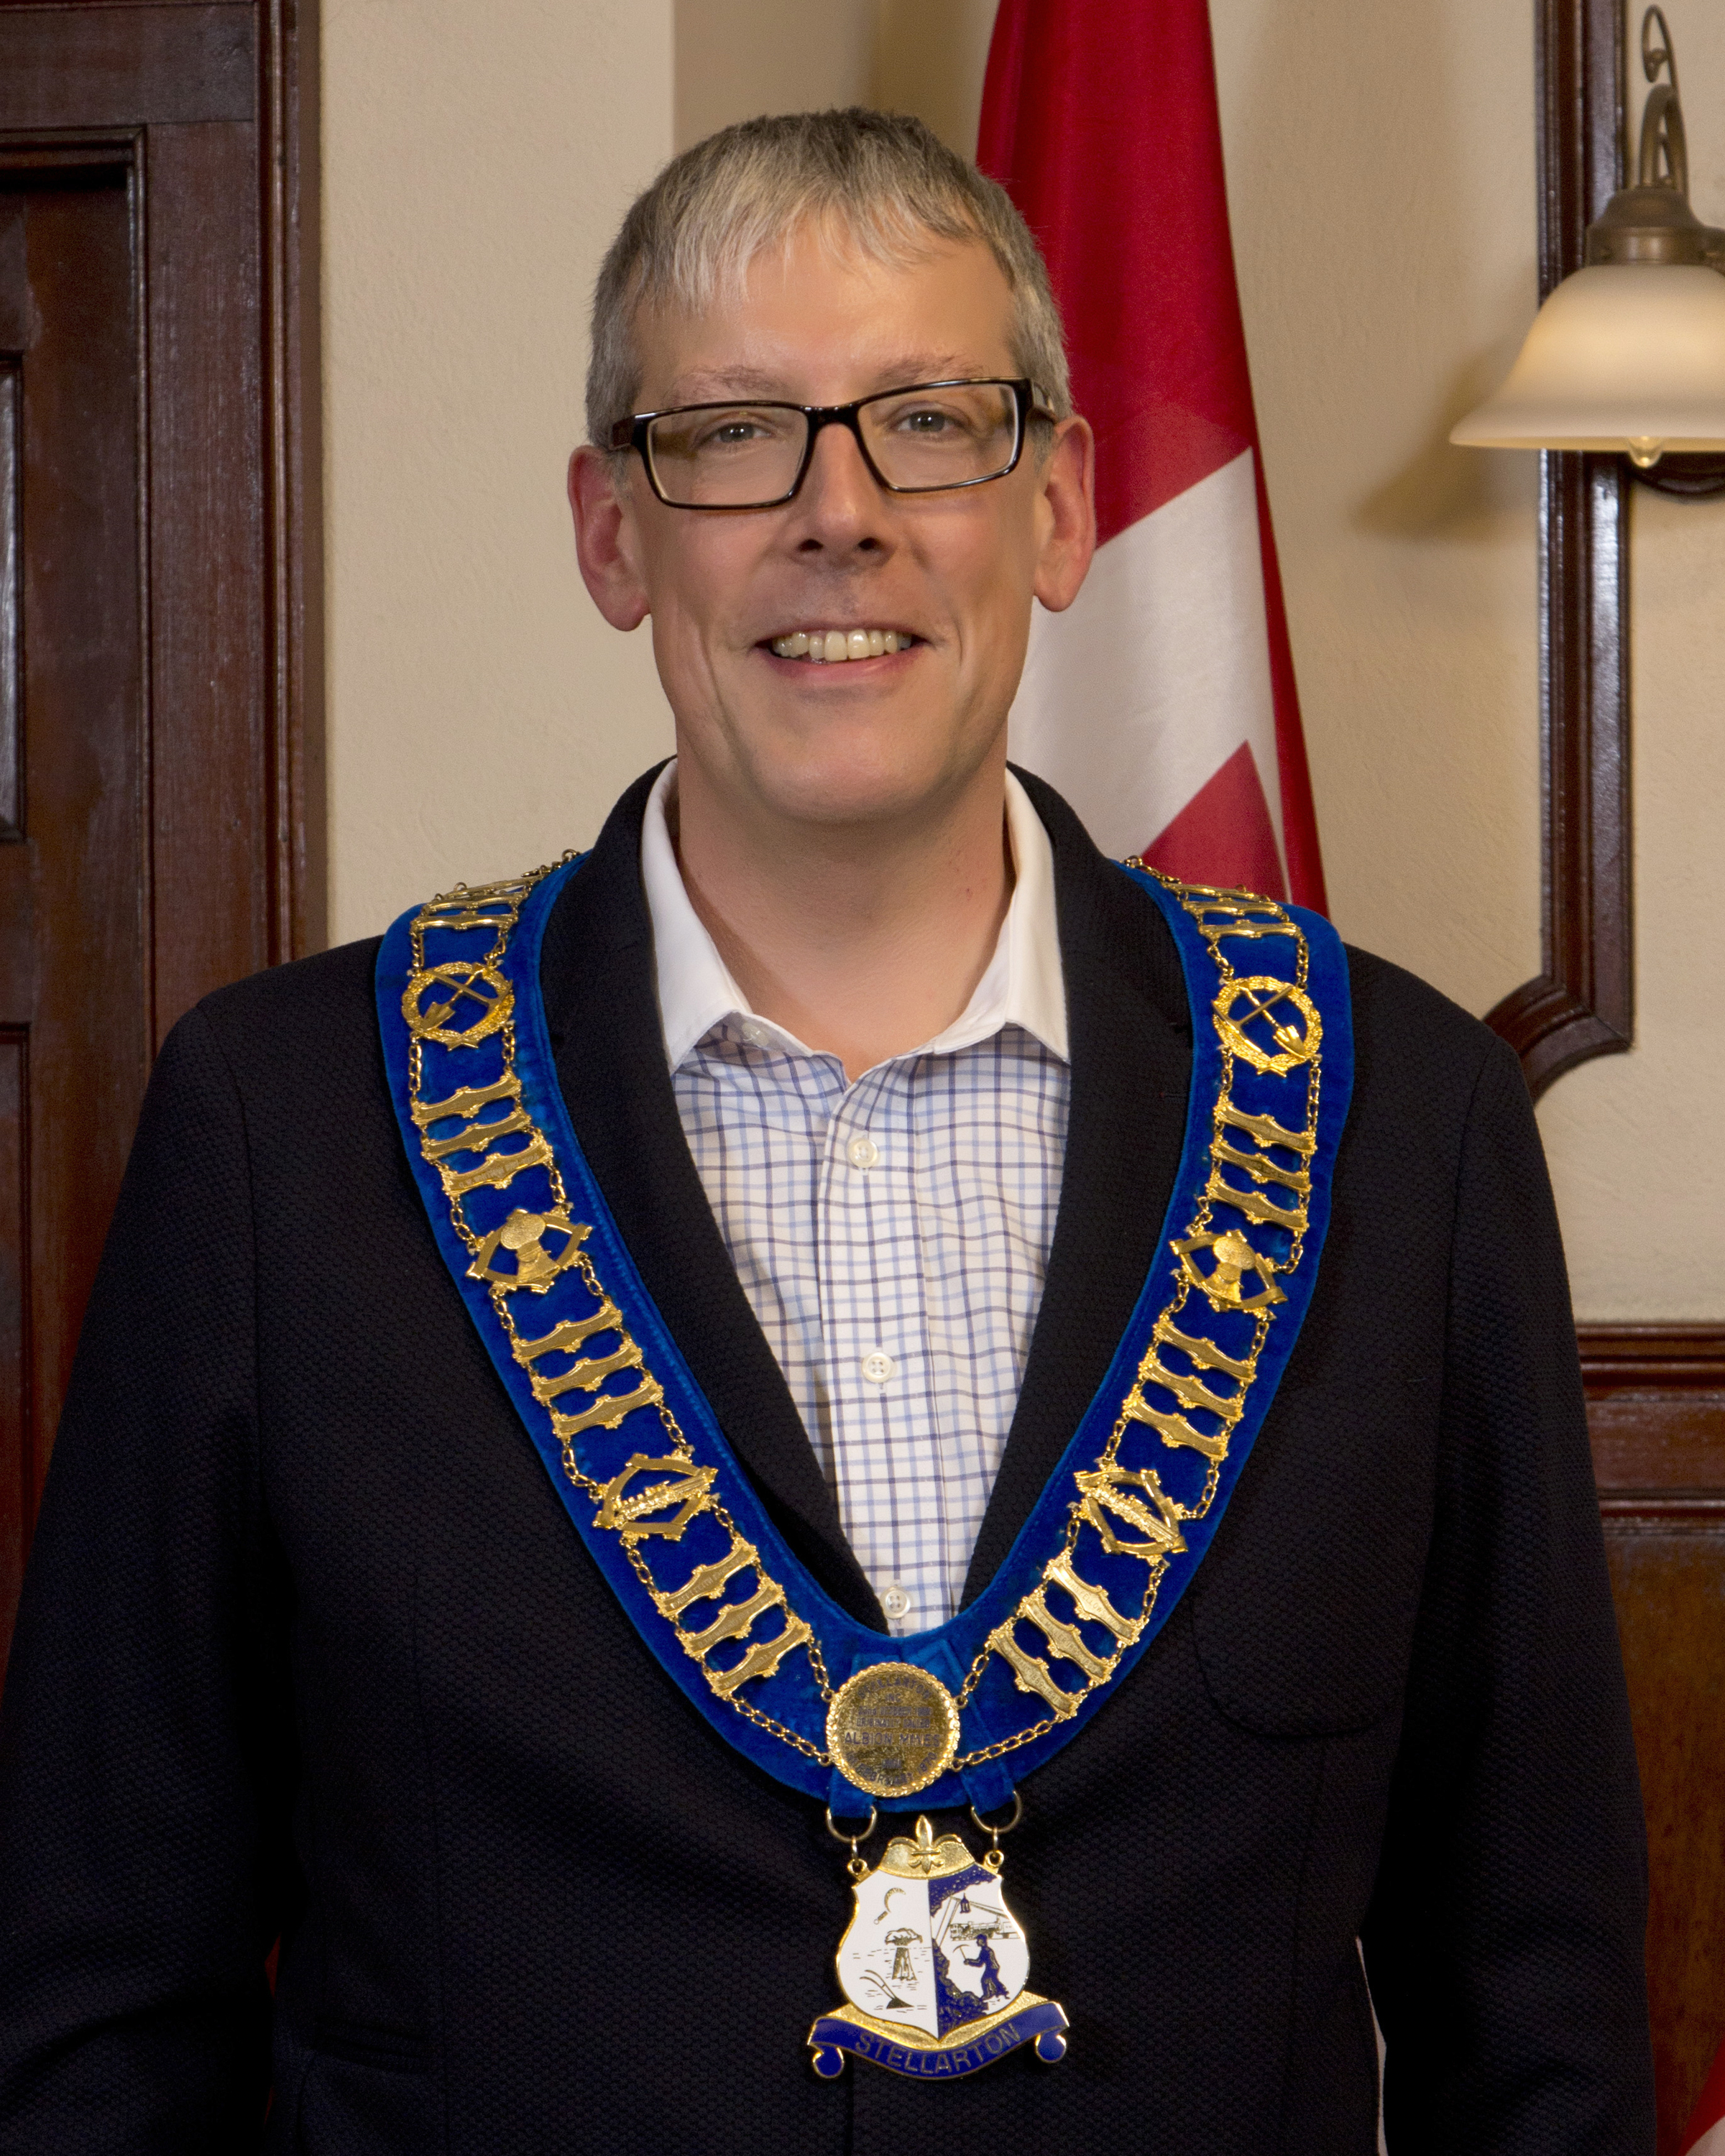 Mayor Danny MacGillivray